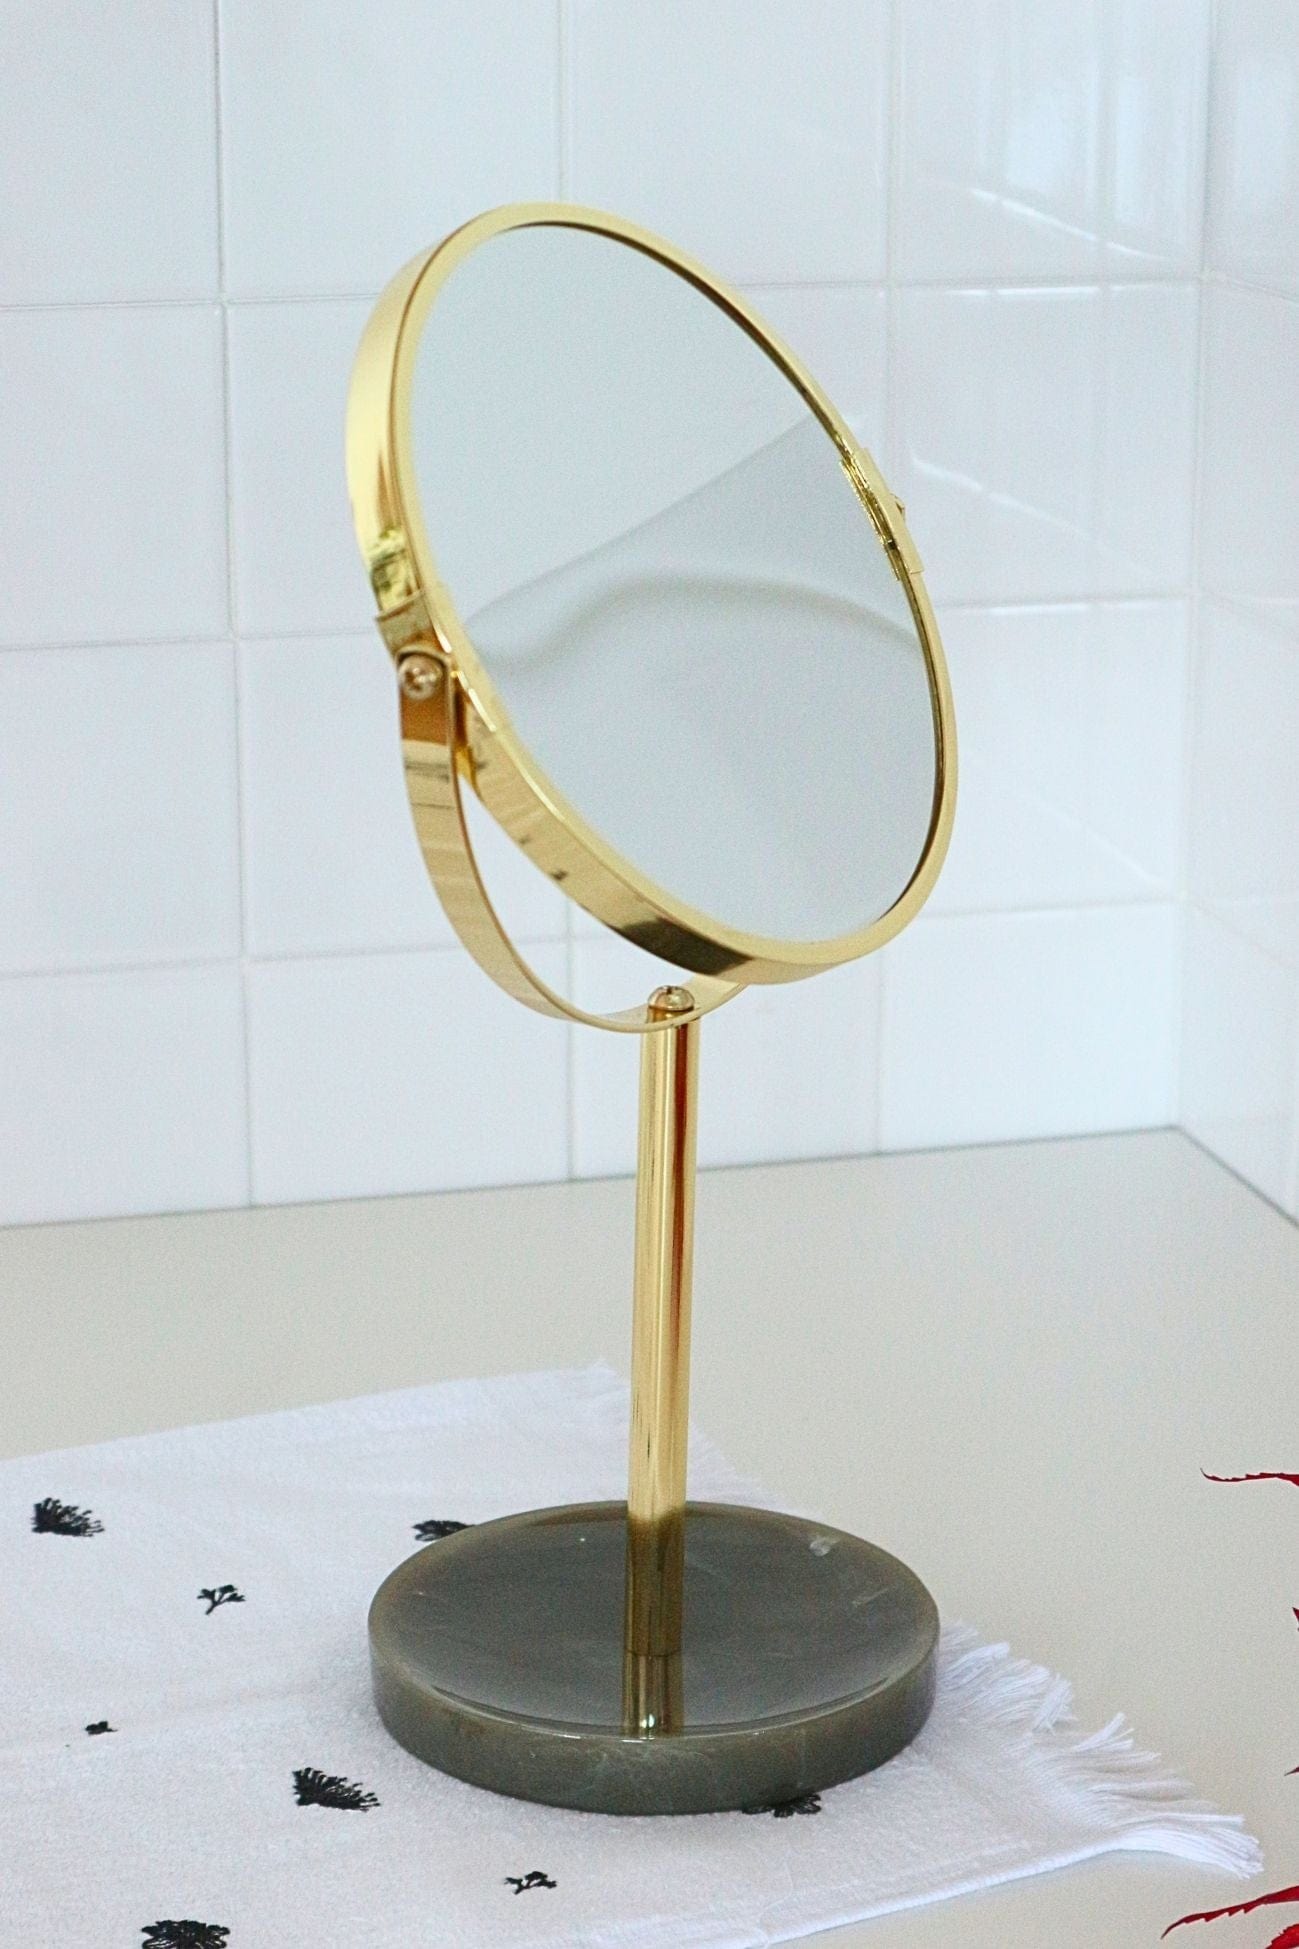 Item International Jibaro Jibaro - Specchio tondo con base in resina dorata e finiture dorate | Item International